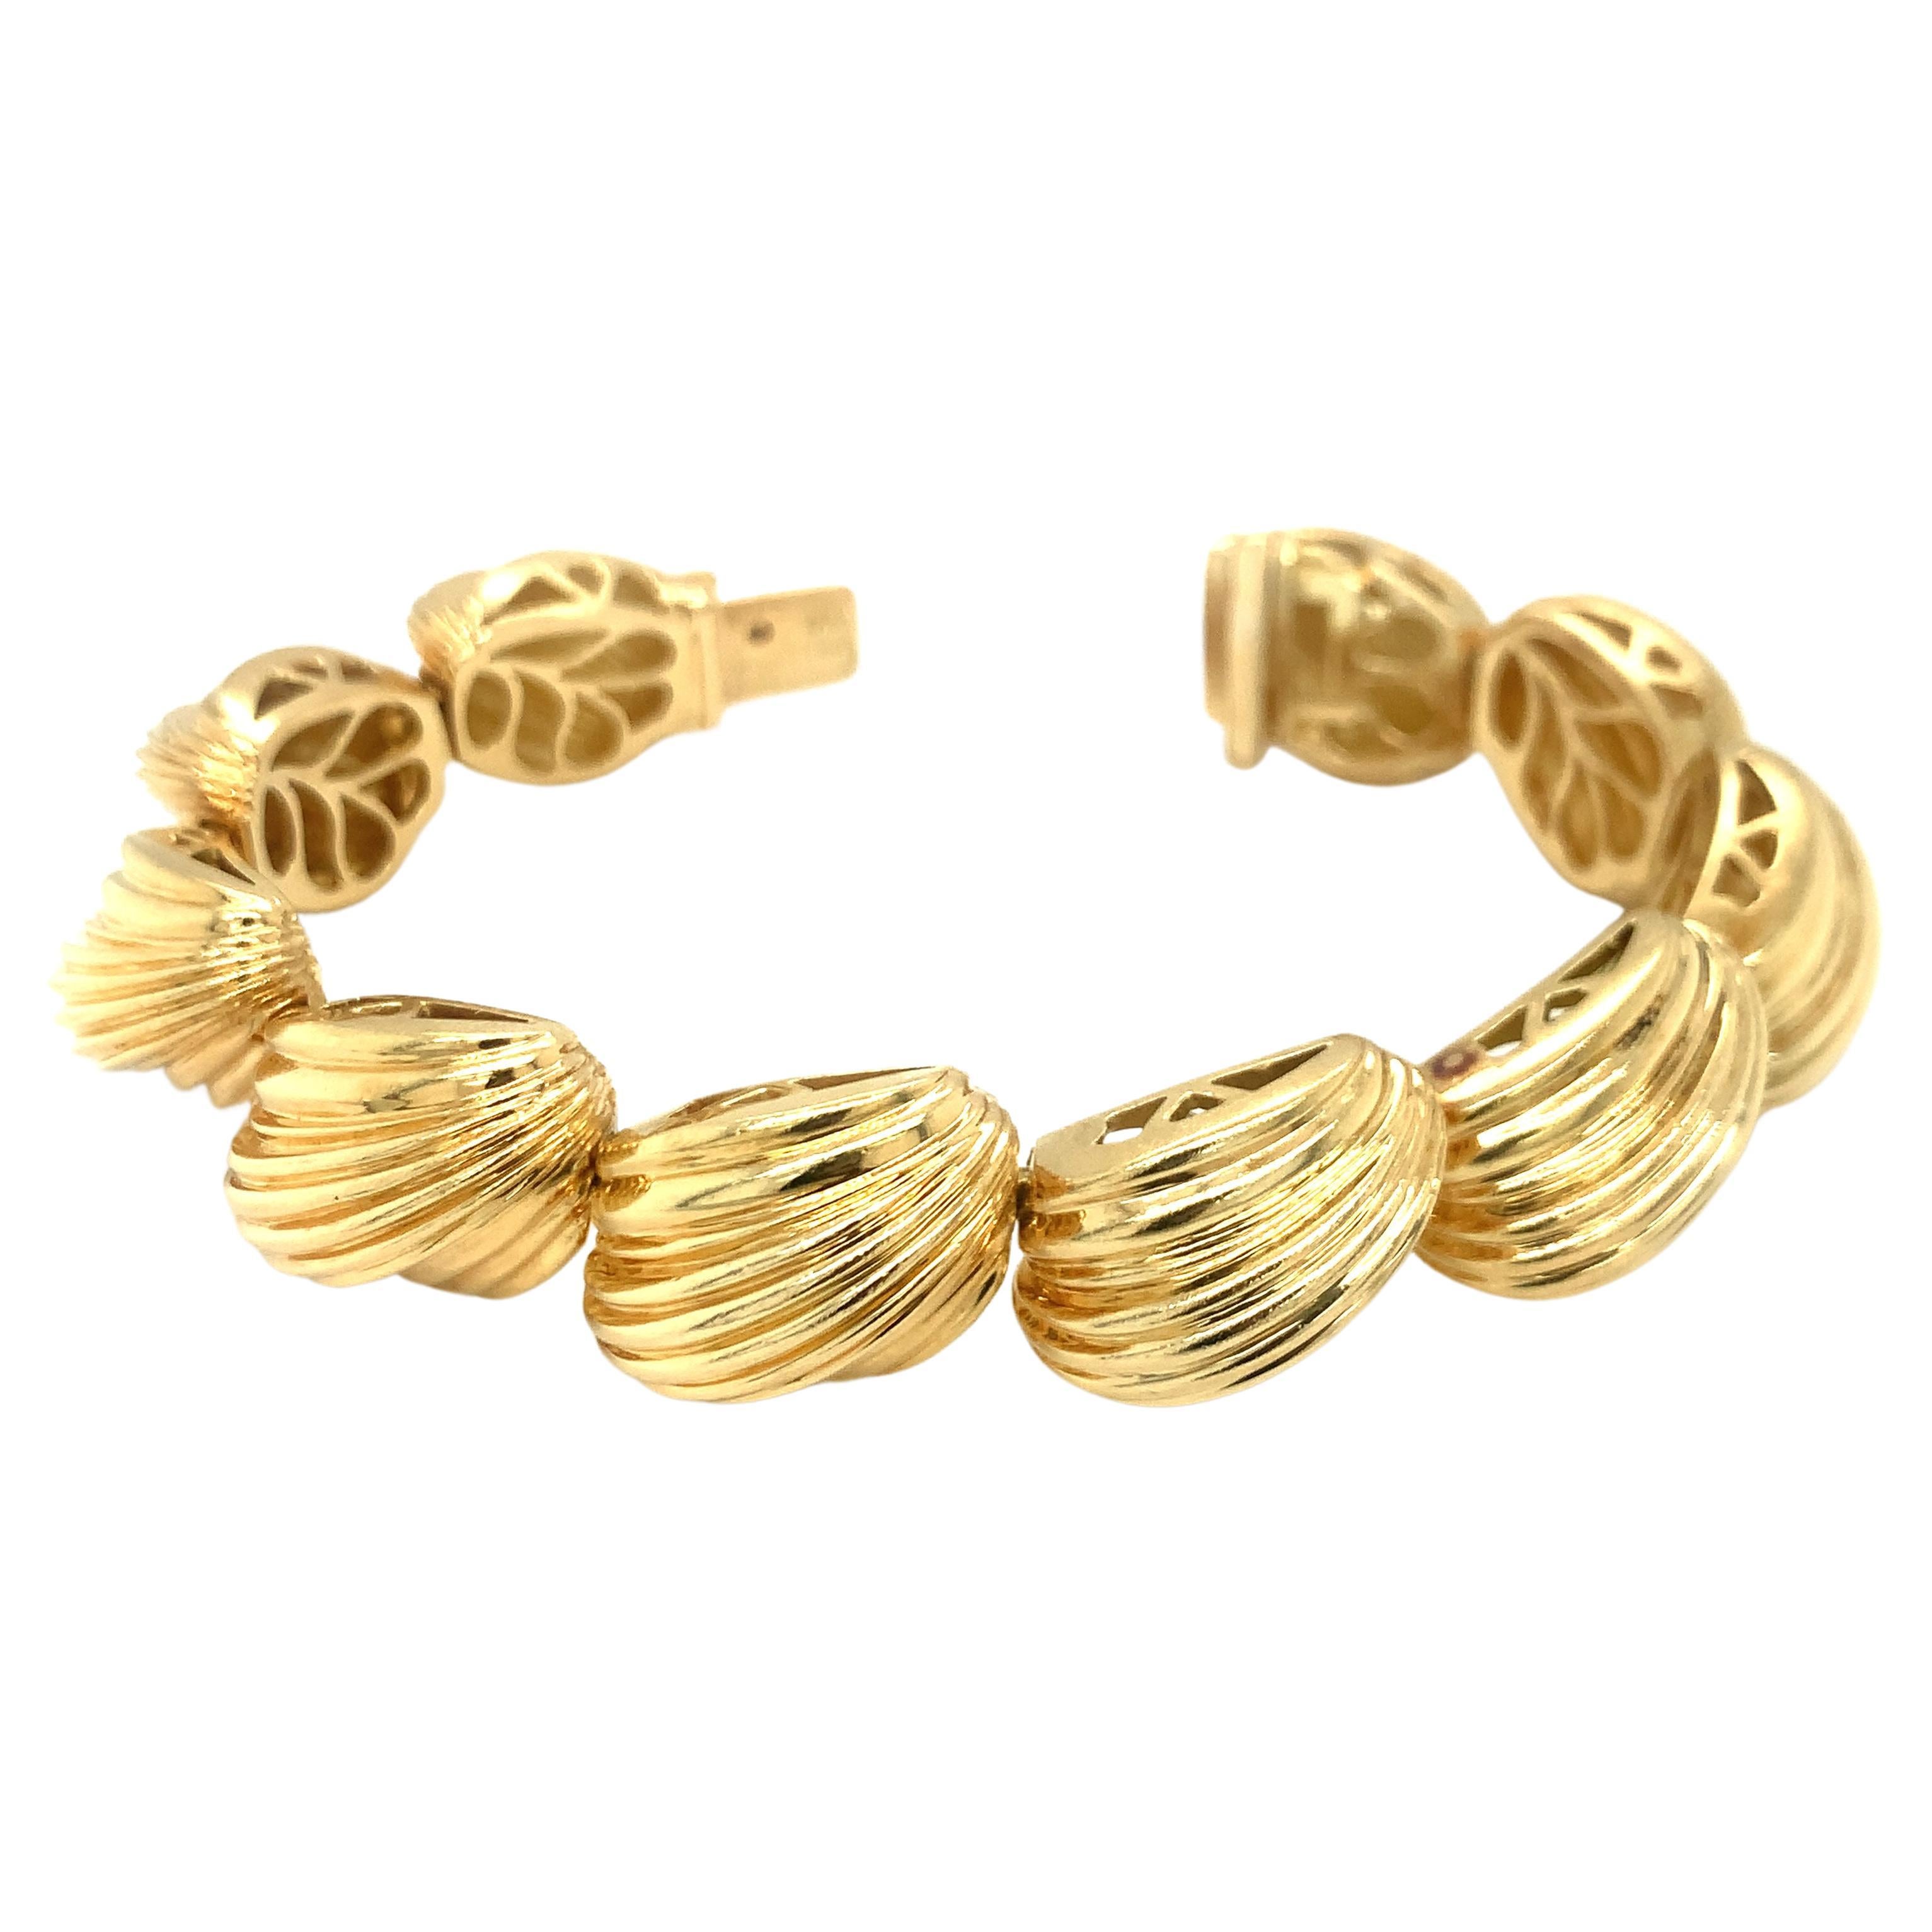 Bracelet en or jaune 18K à maillons en forme de coquillage par Hammerman Brothers